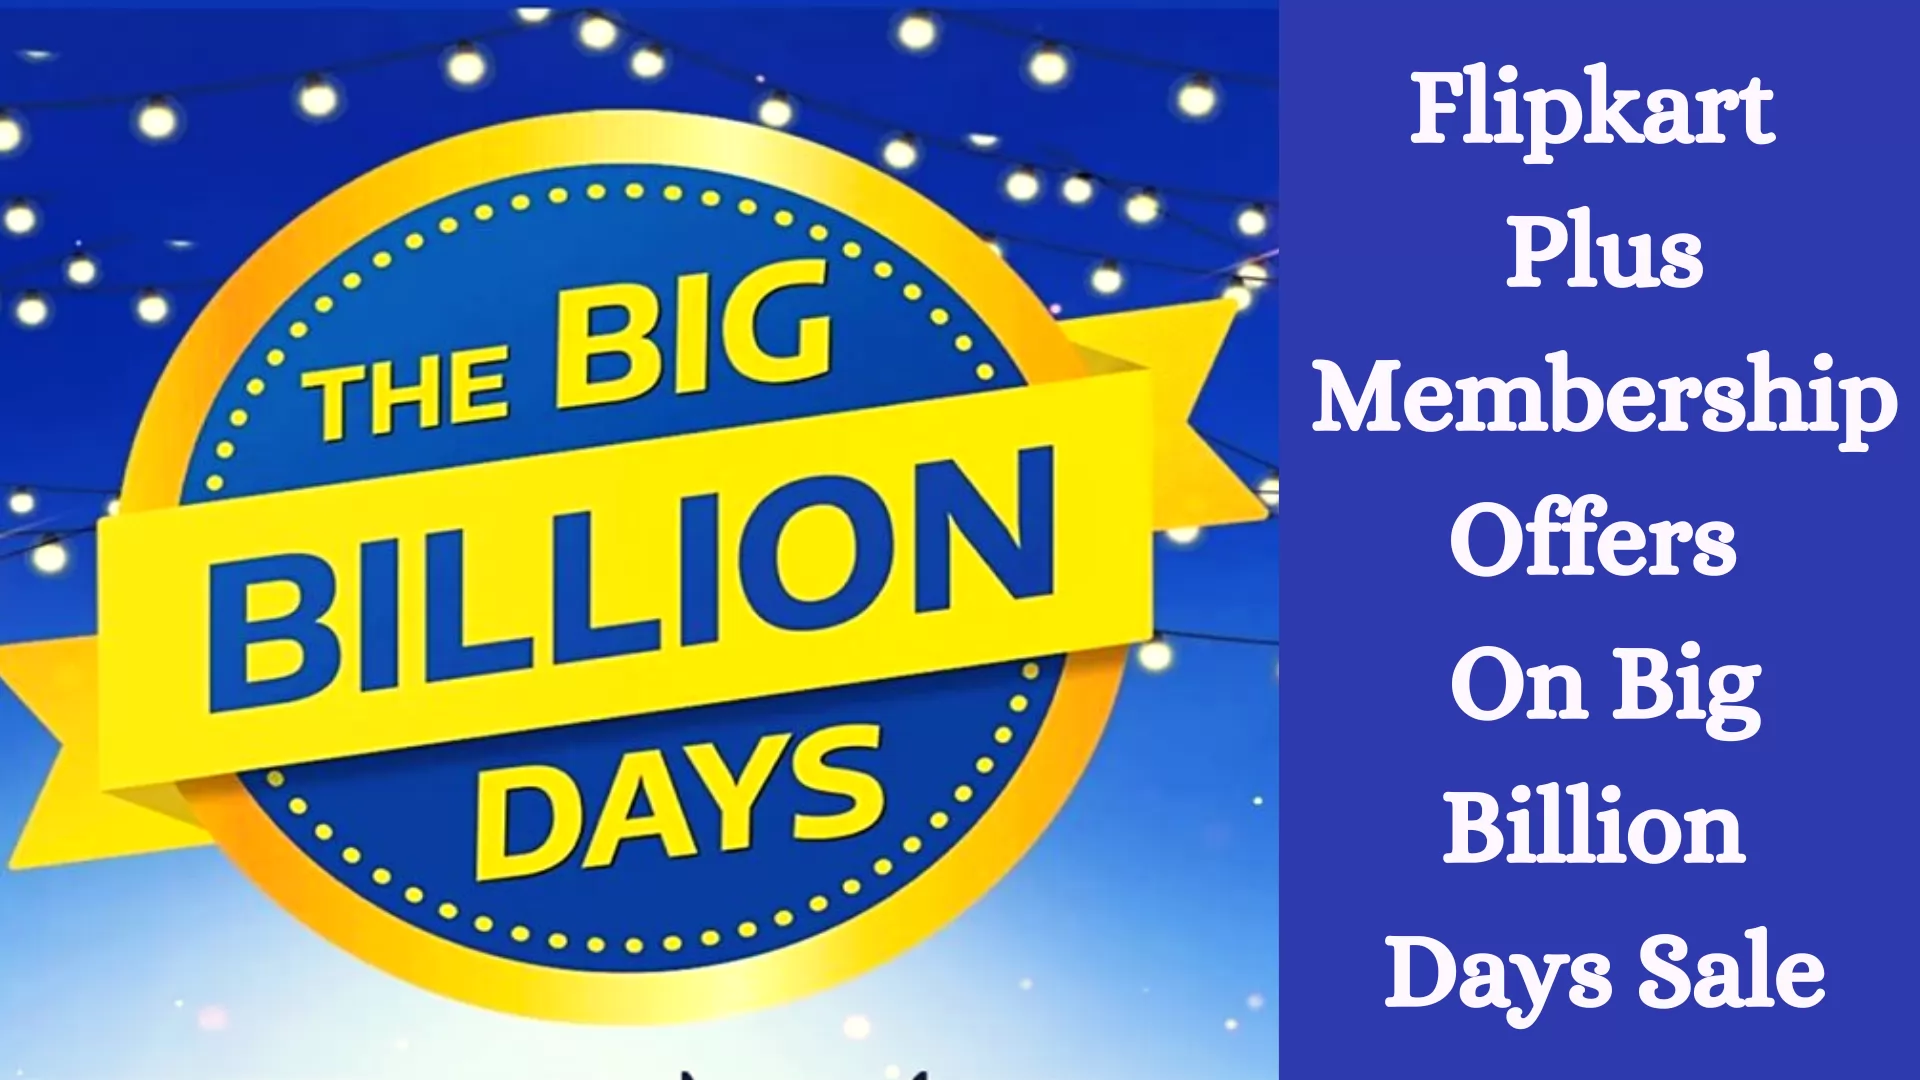 Big Billion Days Offers for Flipkart Plus Members